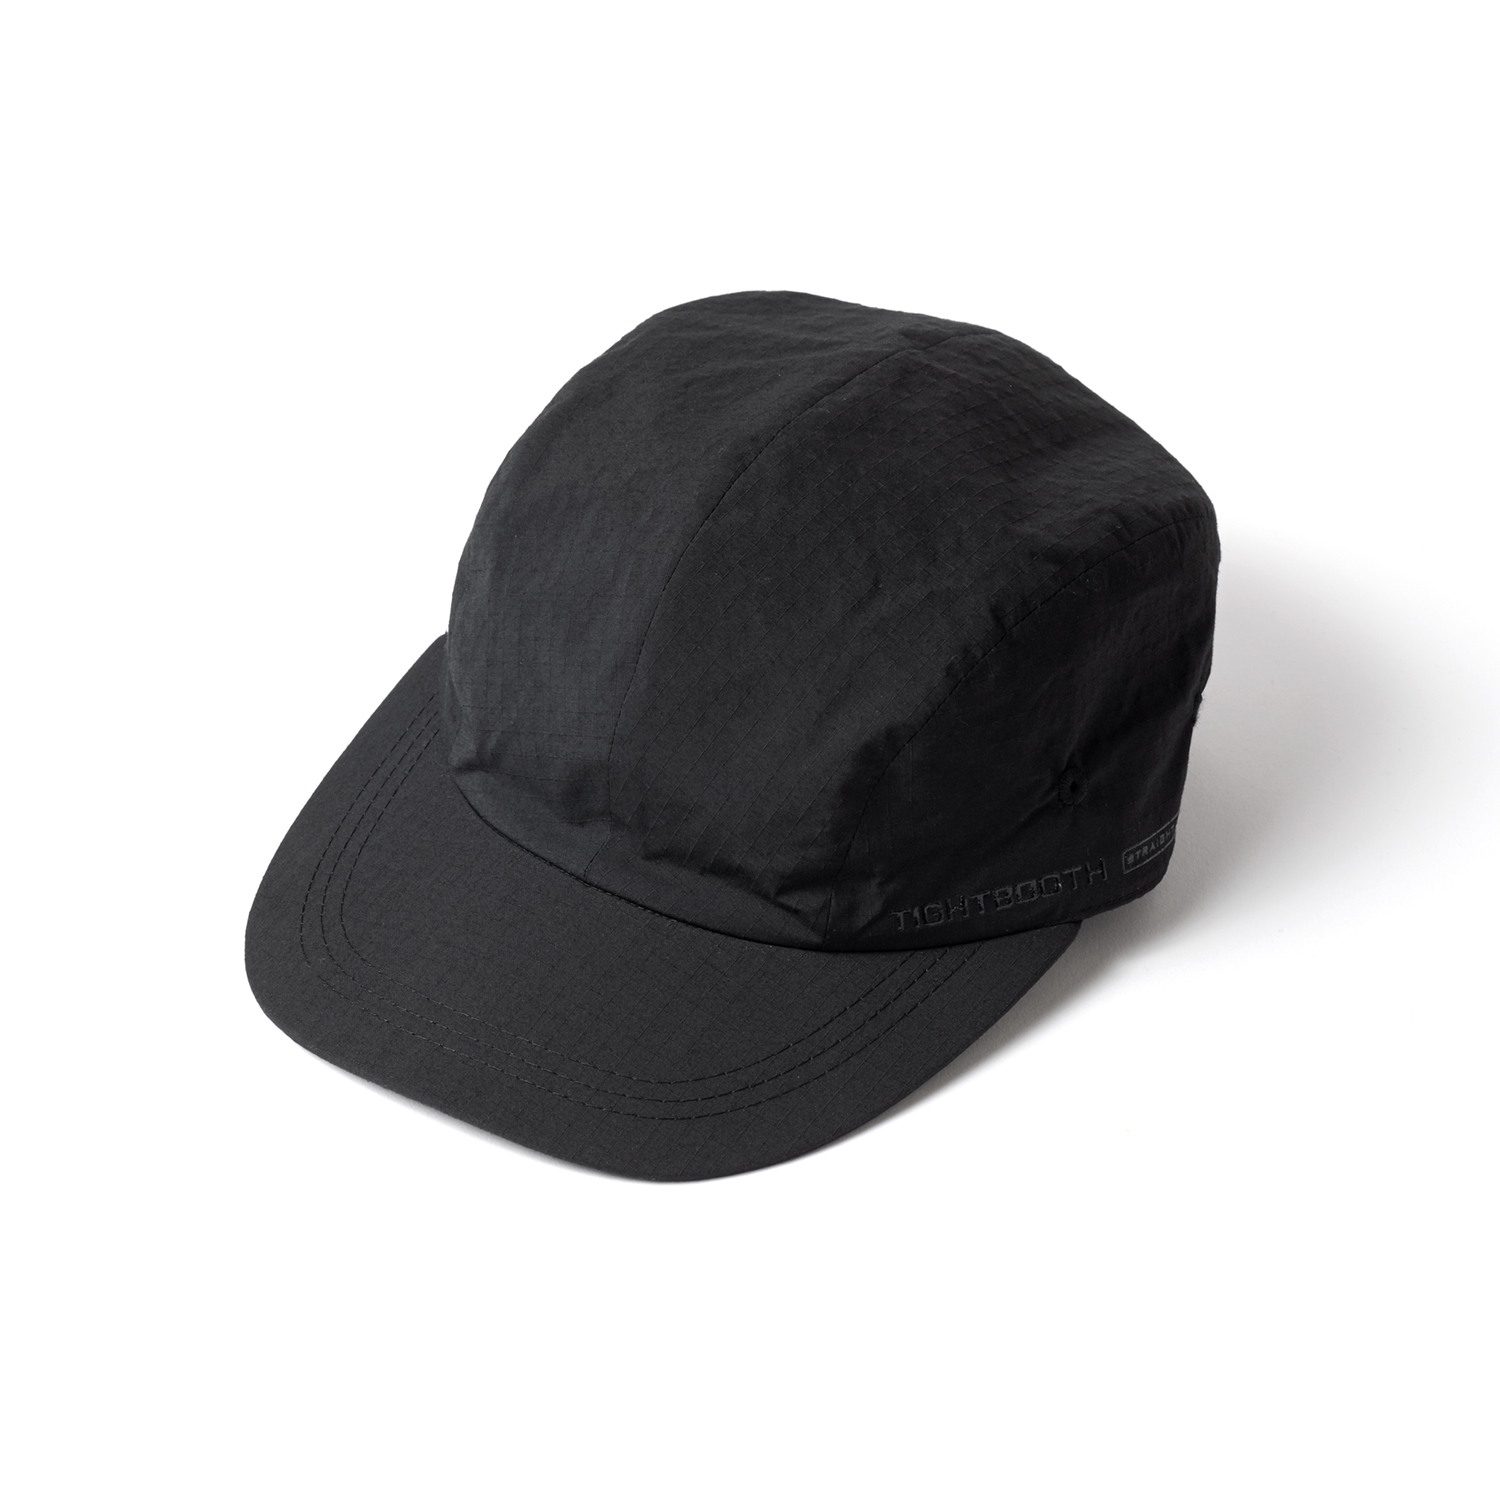 TIGHTBOOTH PAISLEY CAMP CAP BLK キャップ - 帽子